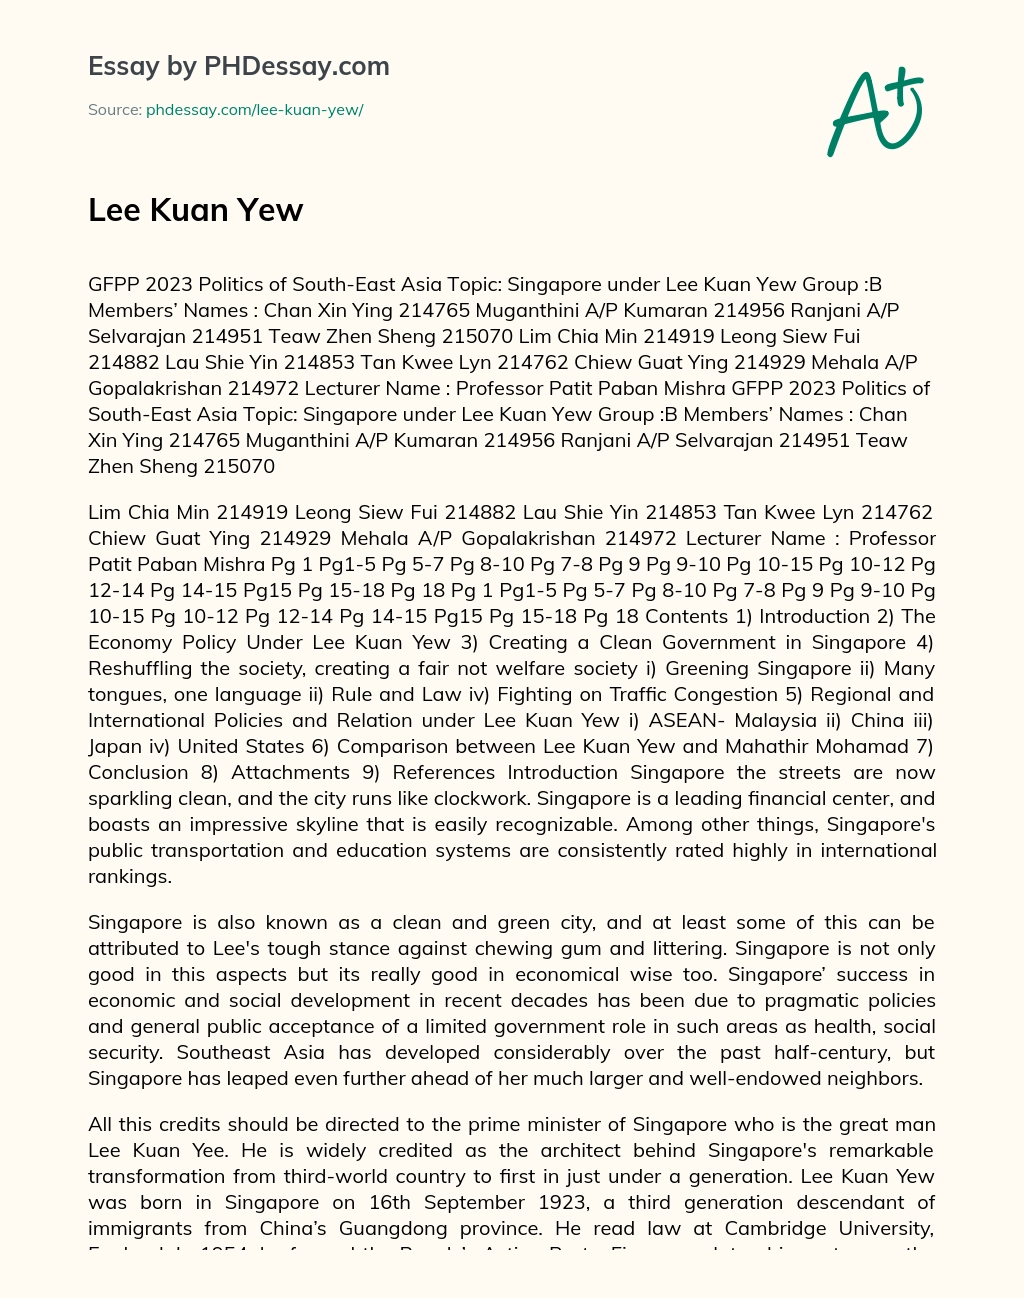 Lee Kuan Yew essay